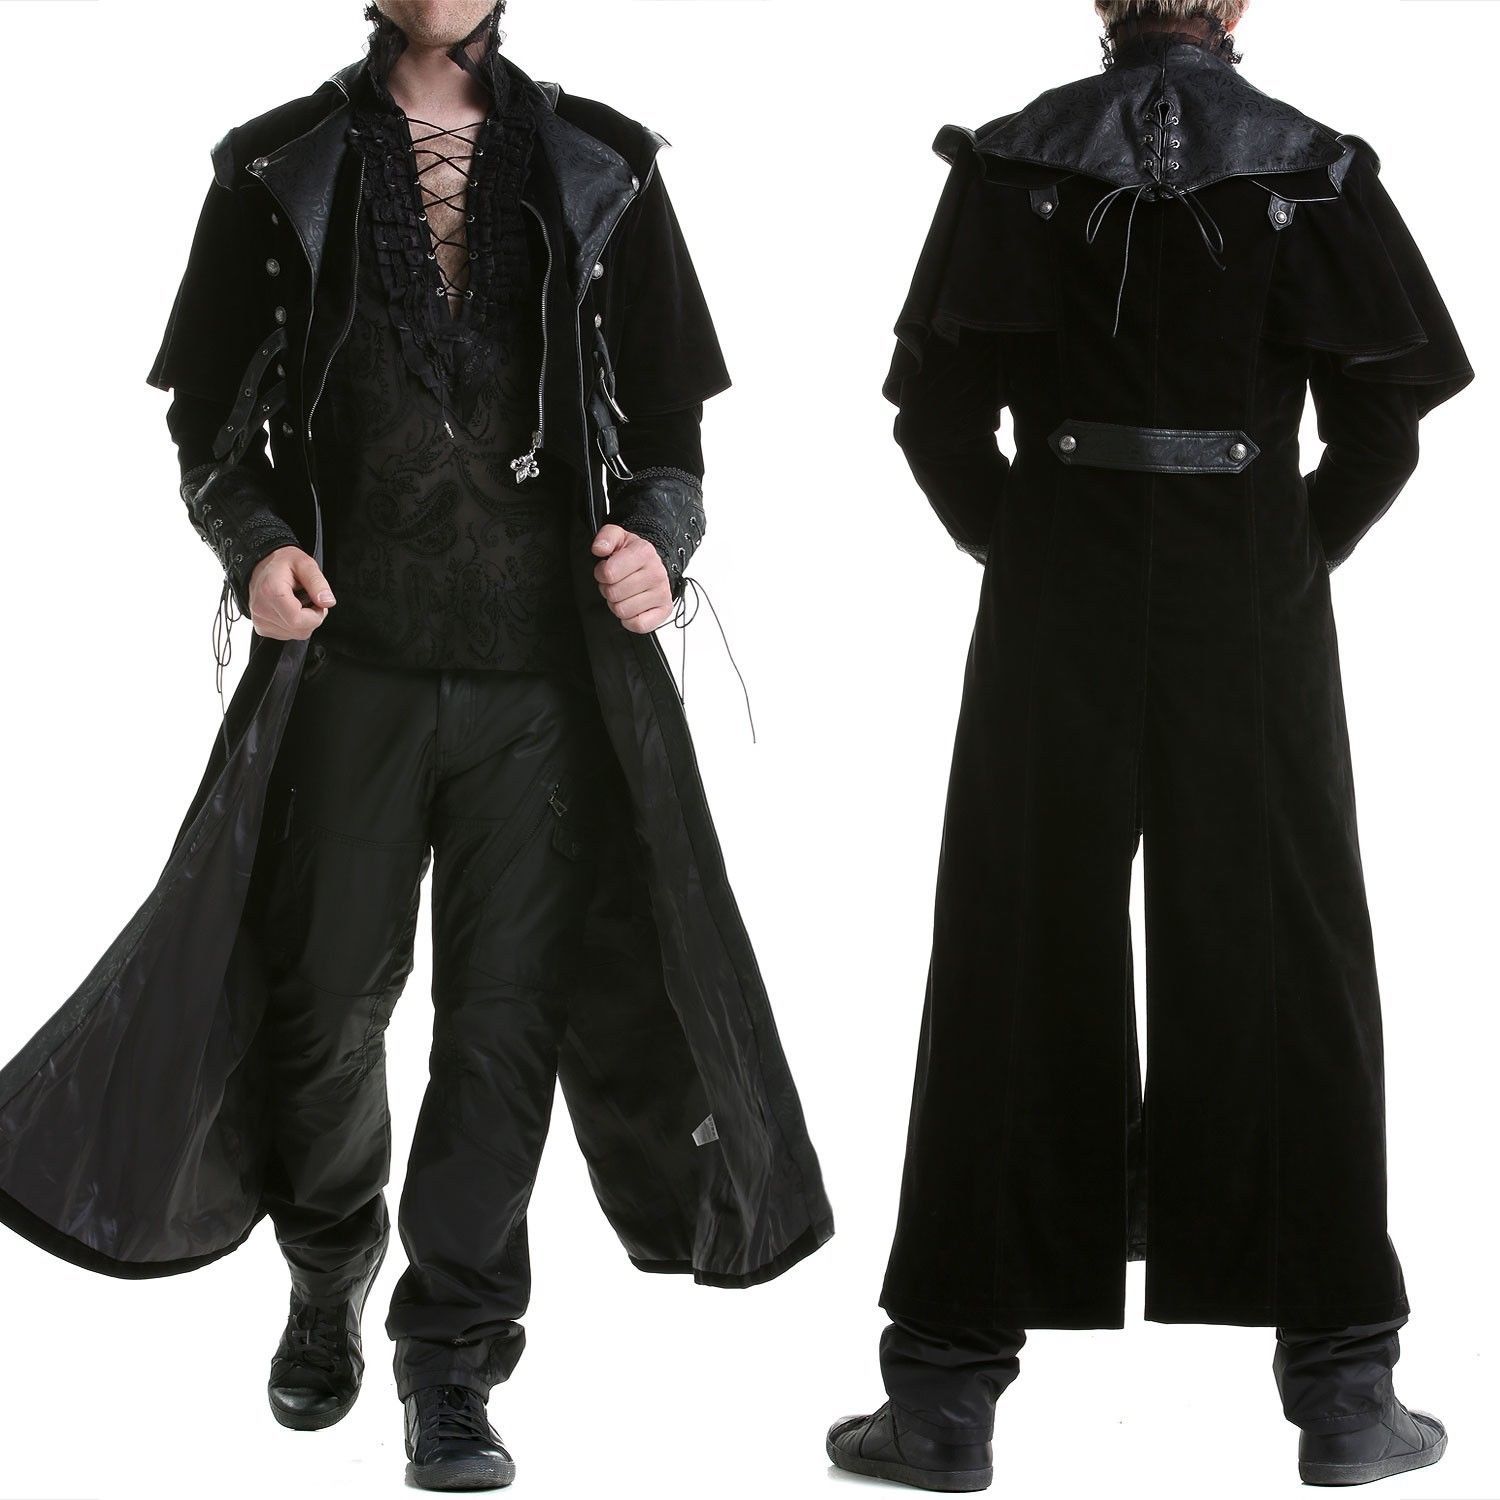 At Punk/spiewak - Mens gothic steampunk coat vtg regency highwayman long jacket